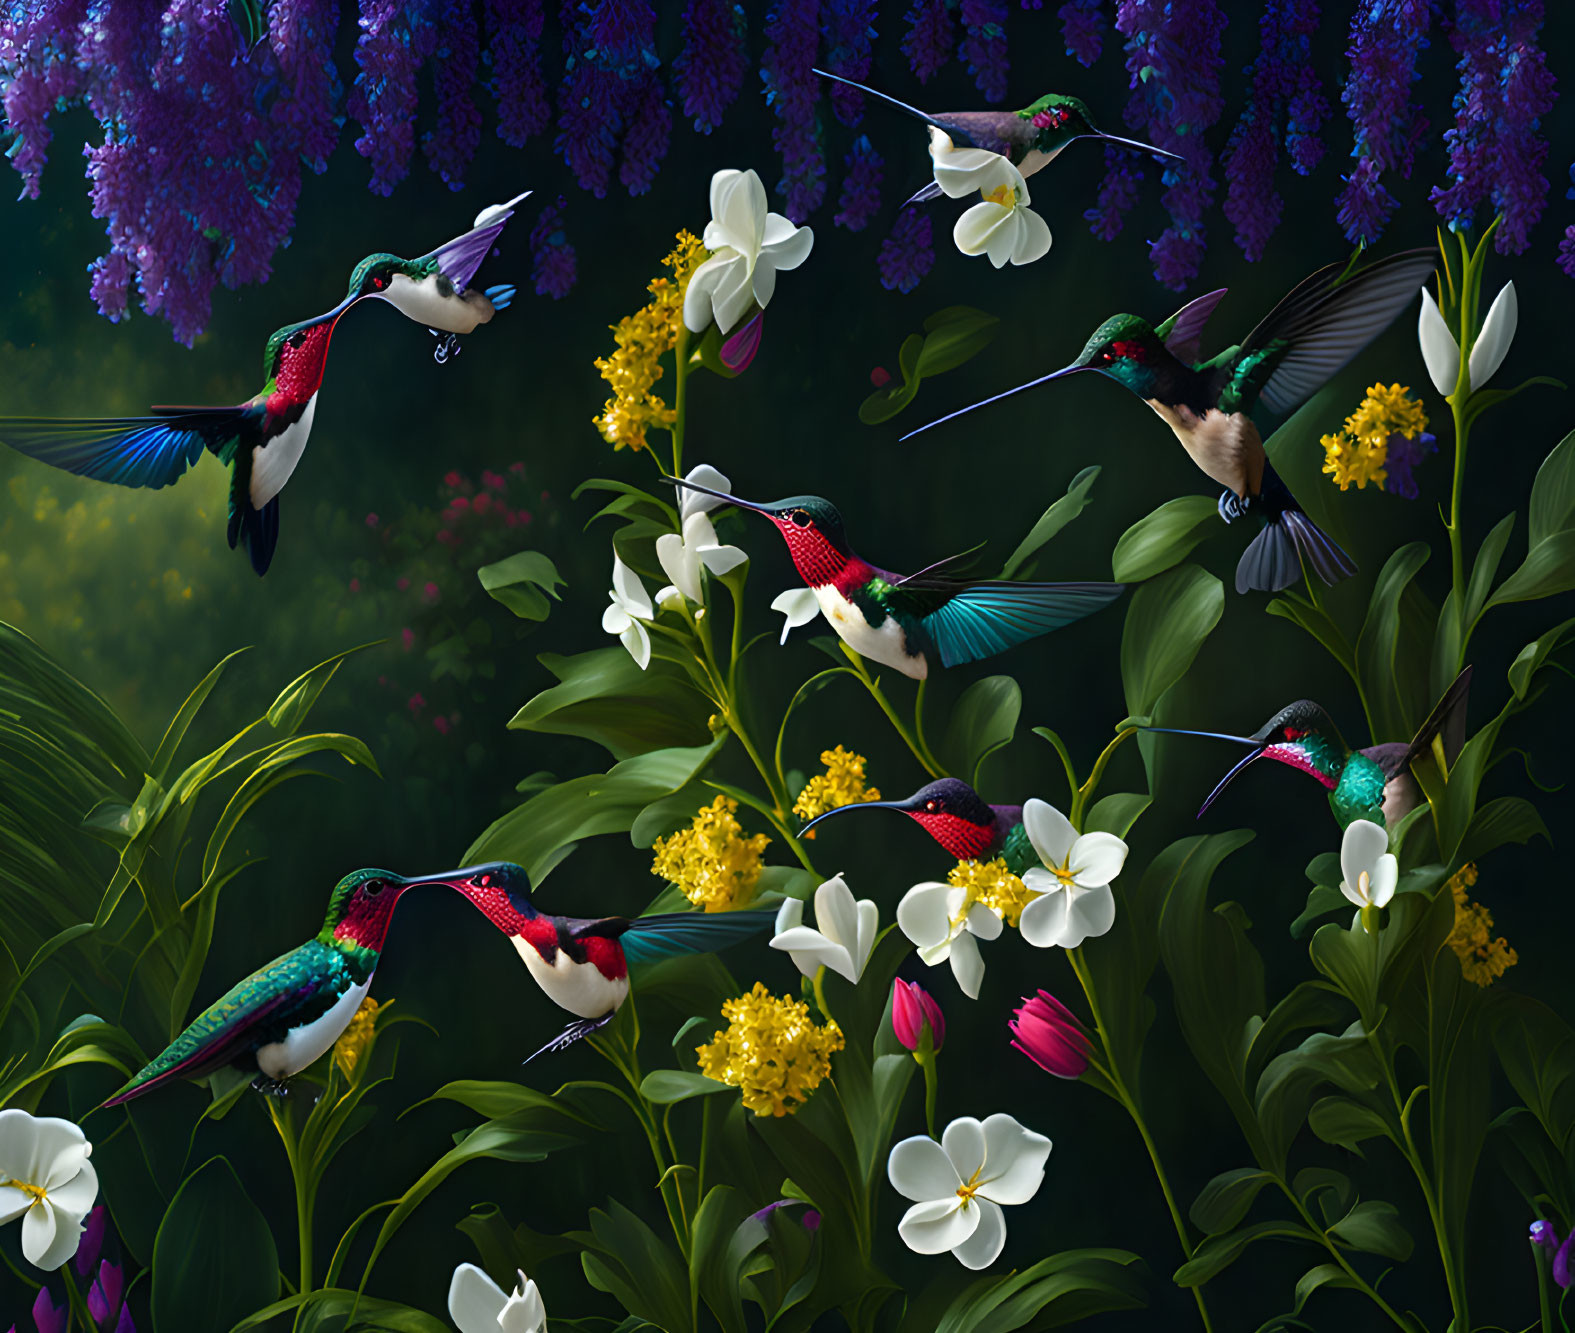 Vibrant hummingbirds among multicolored flowers on dark foliage background